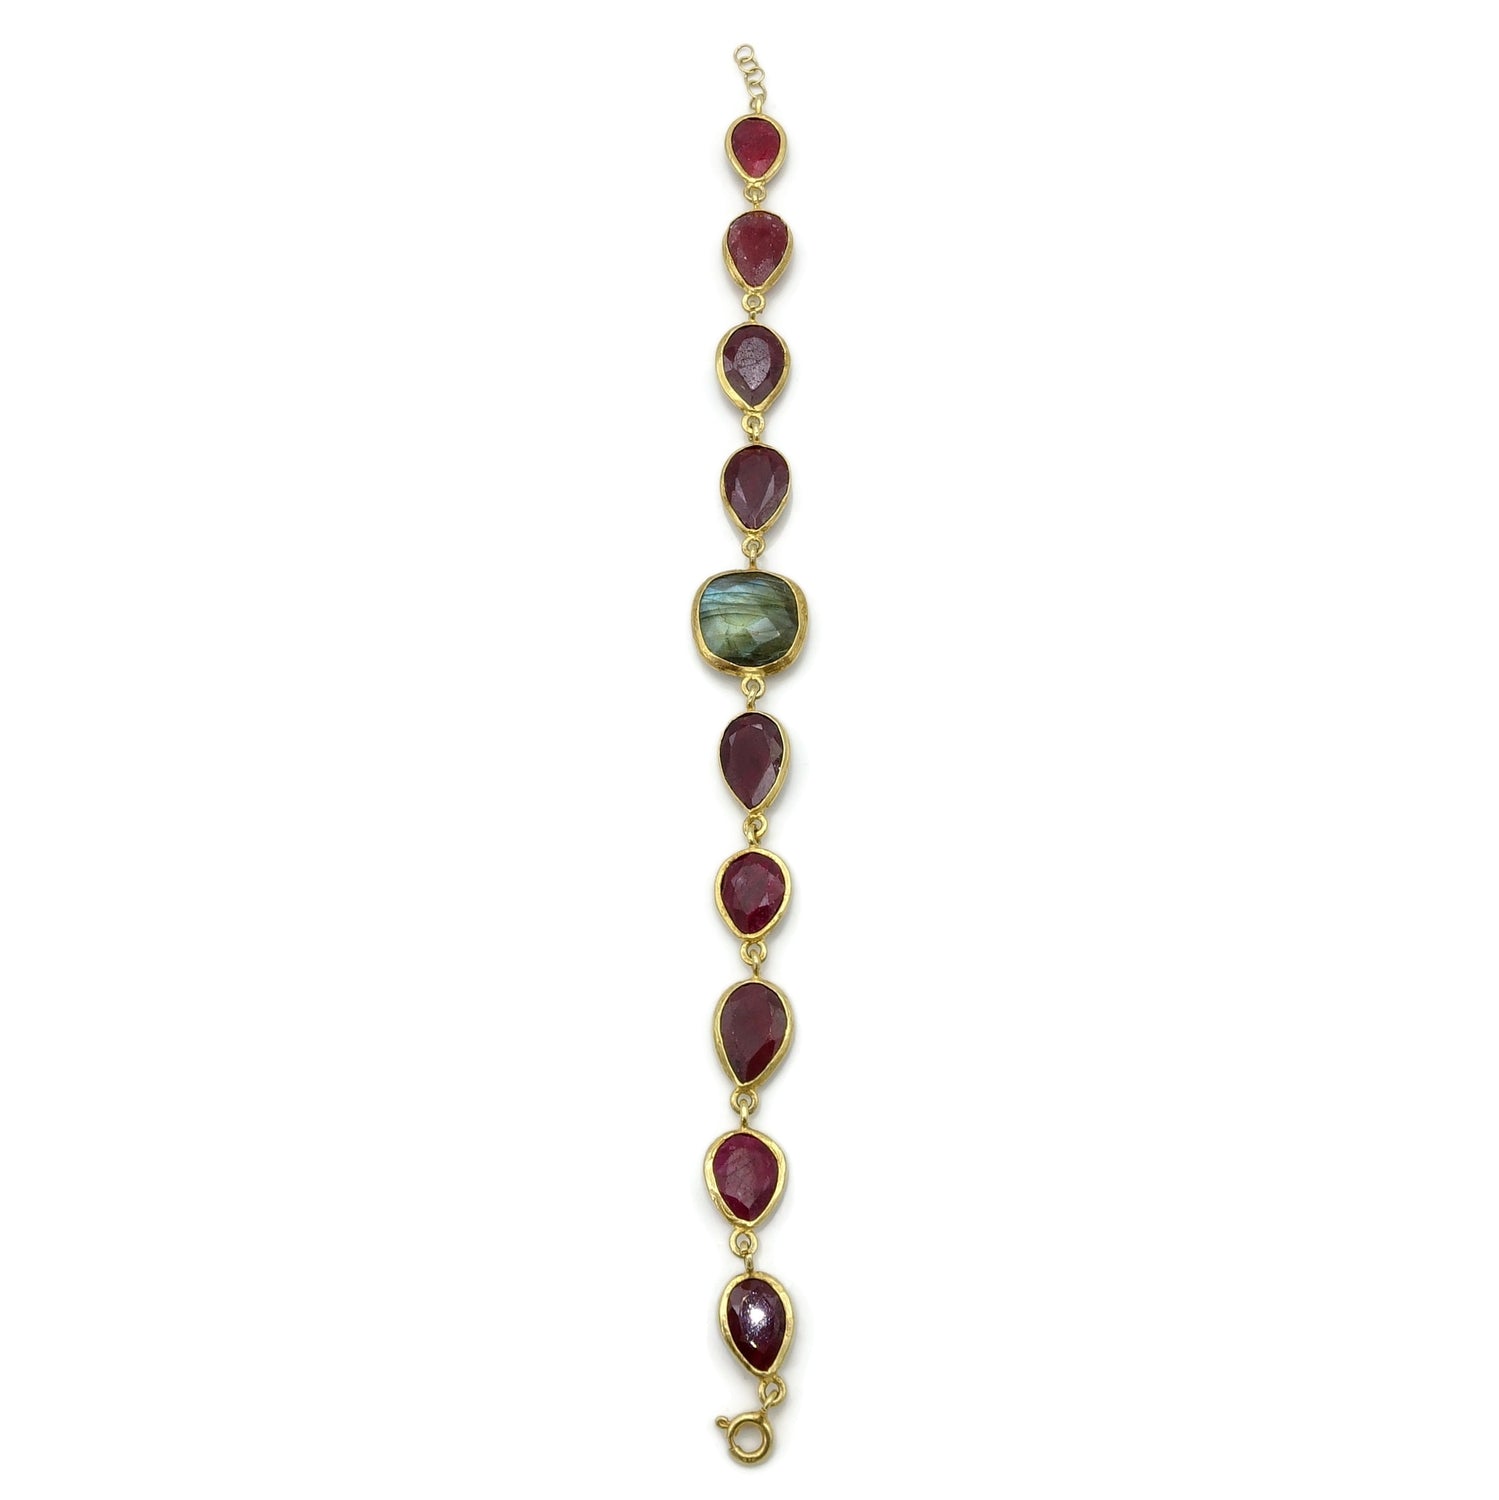 22ct gold plated Bracelet in Ruby, Labradorite Multi semi precious gemstones - Handmade